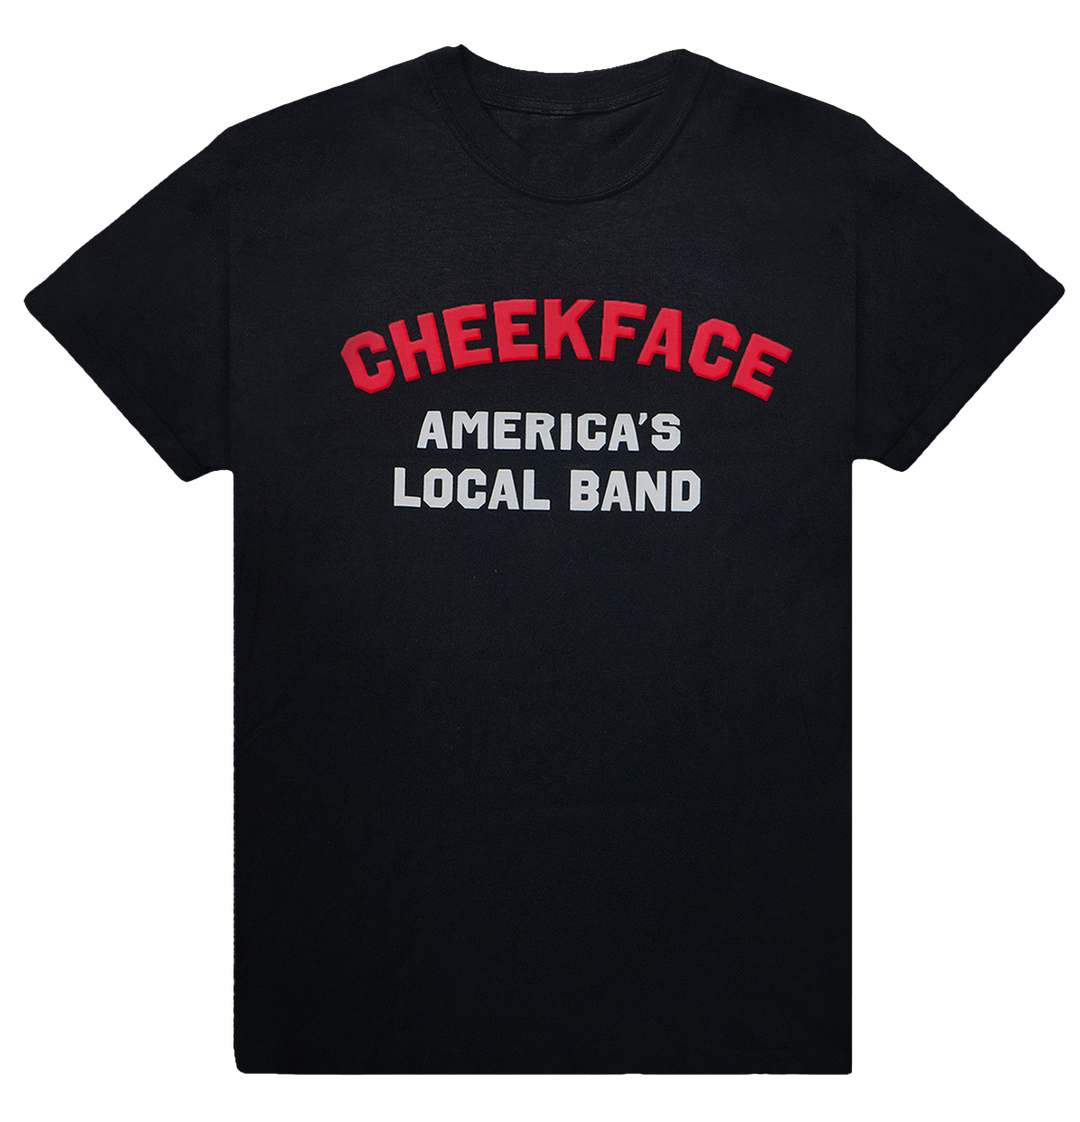 America's Local Band Tee